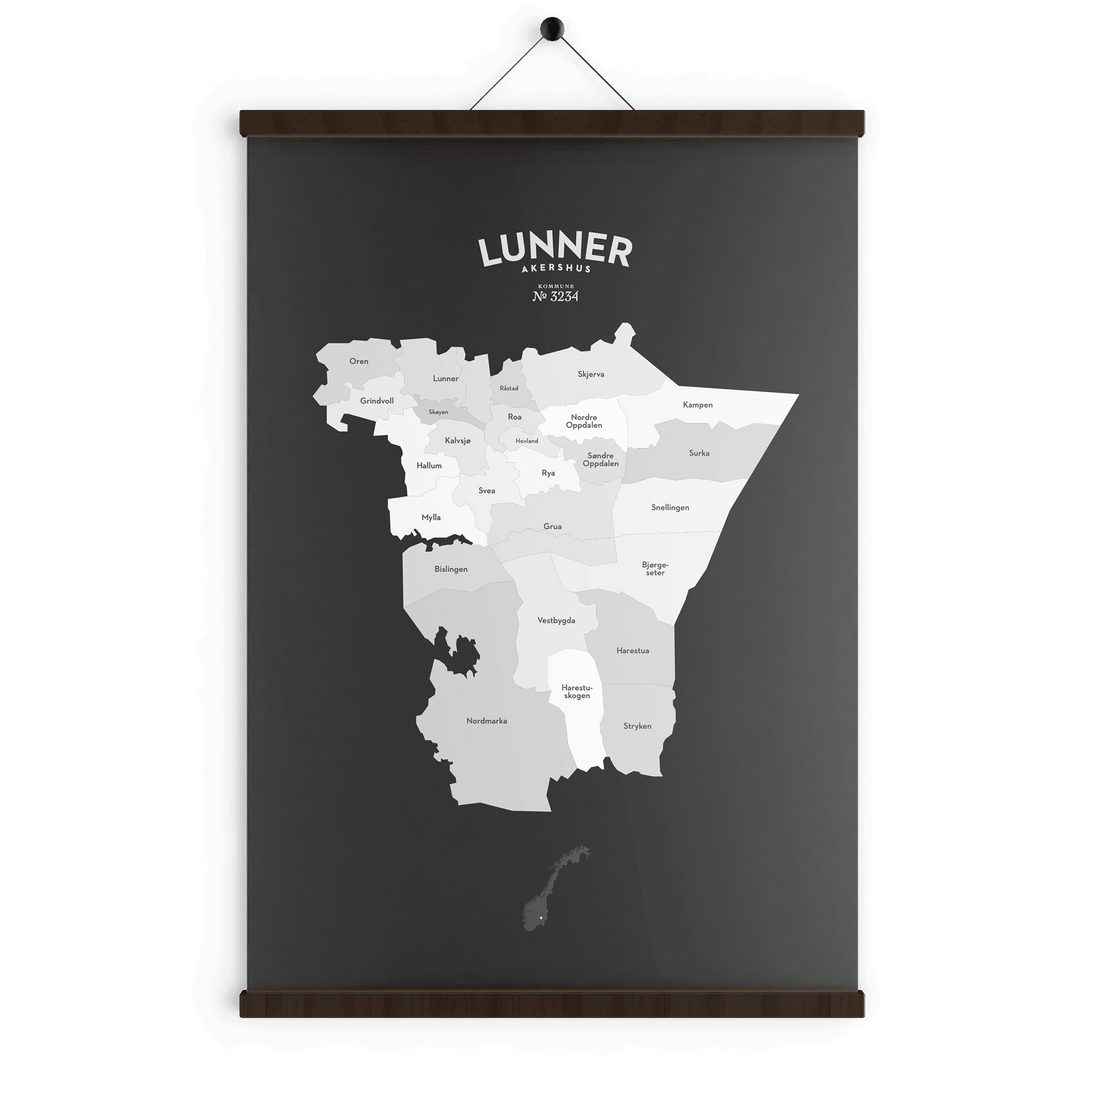 Lunner